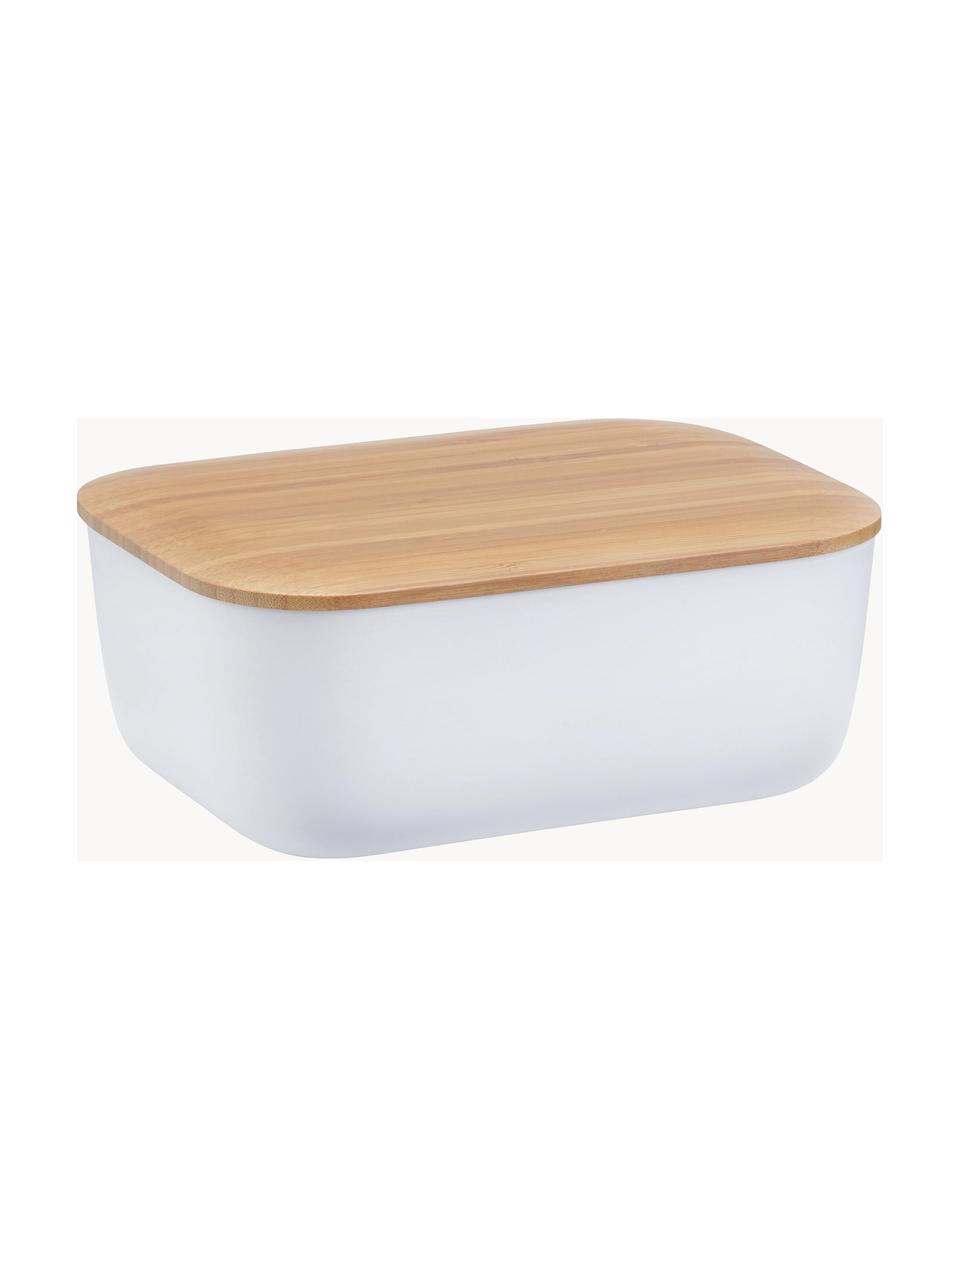 Butterdose Box-It mit Bambus-Deckel, Dose: Melamin, Deckel: Bambus, Weiss, Helles Holz, B 15 x H 7 cm